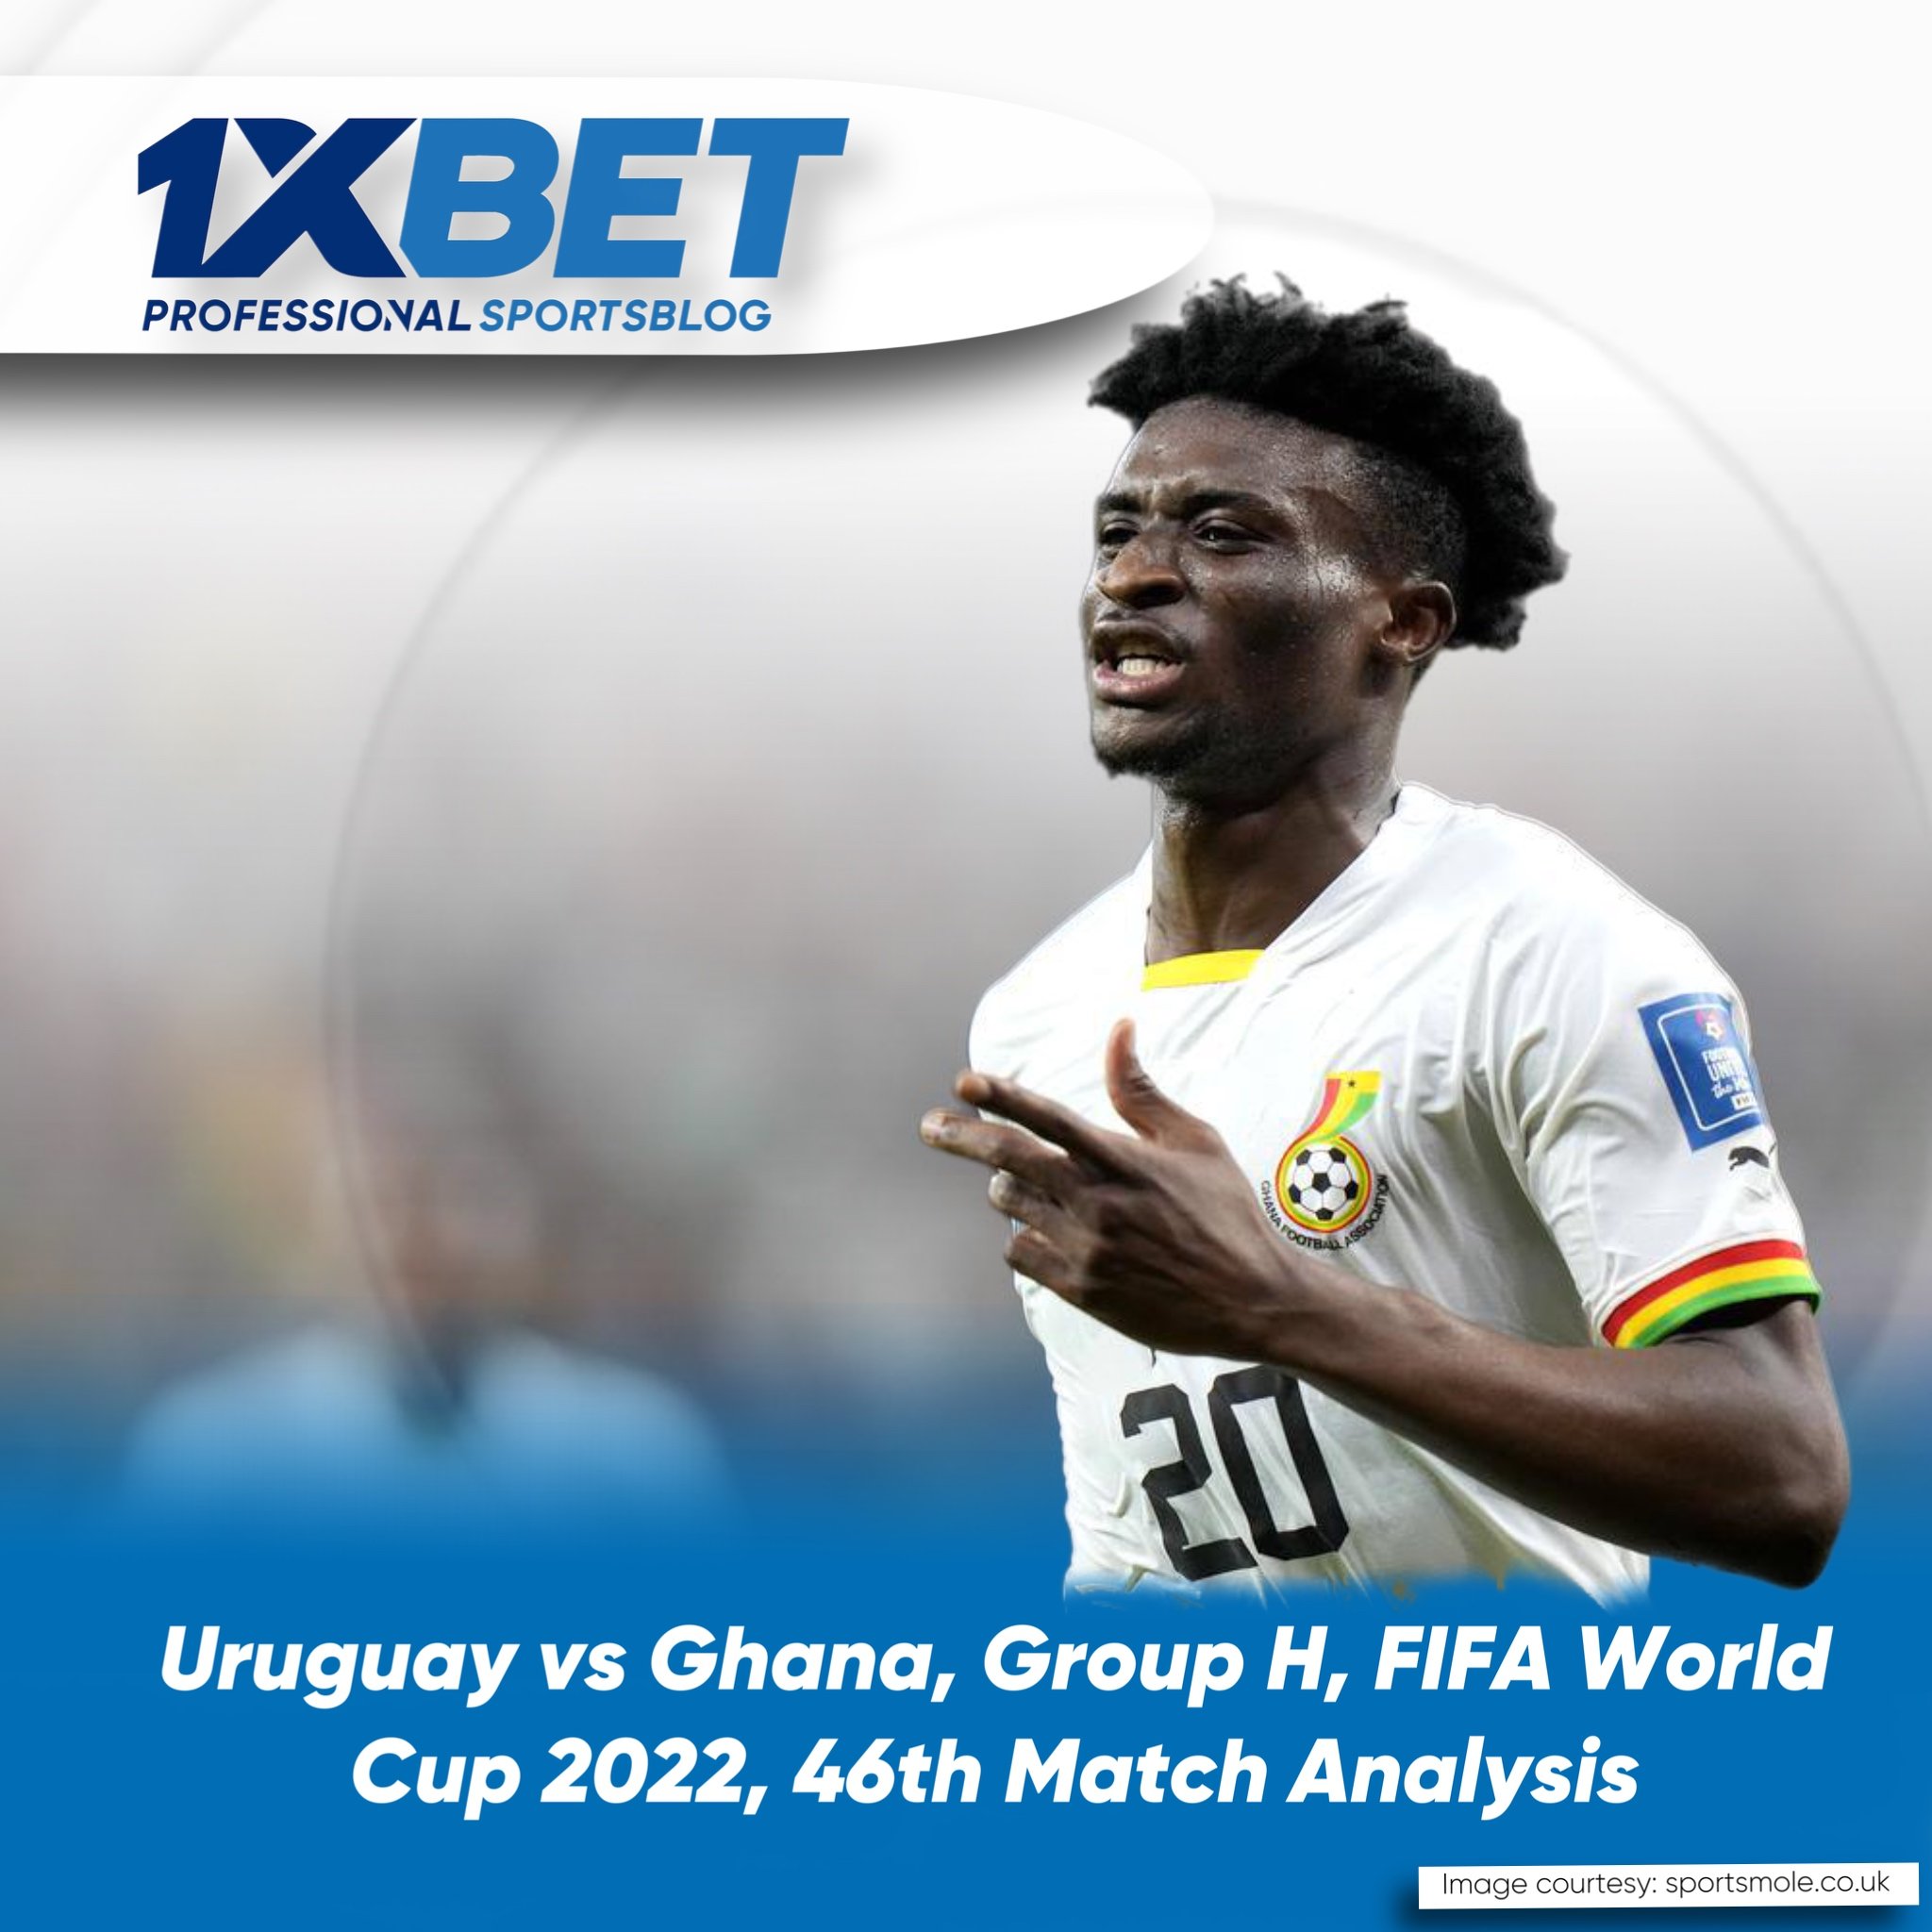 Uruguay vs Ghana, Group H, FIFA World Cup 2022, 46th Match Analysis